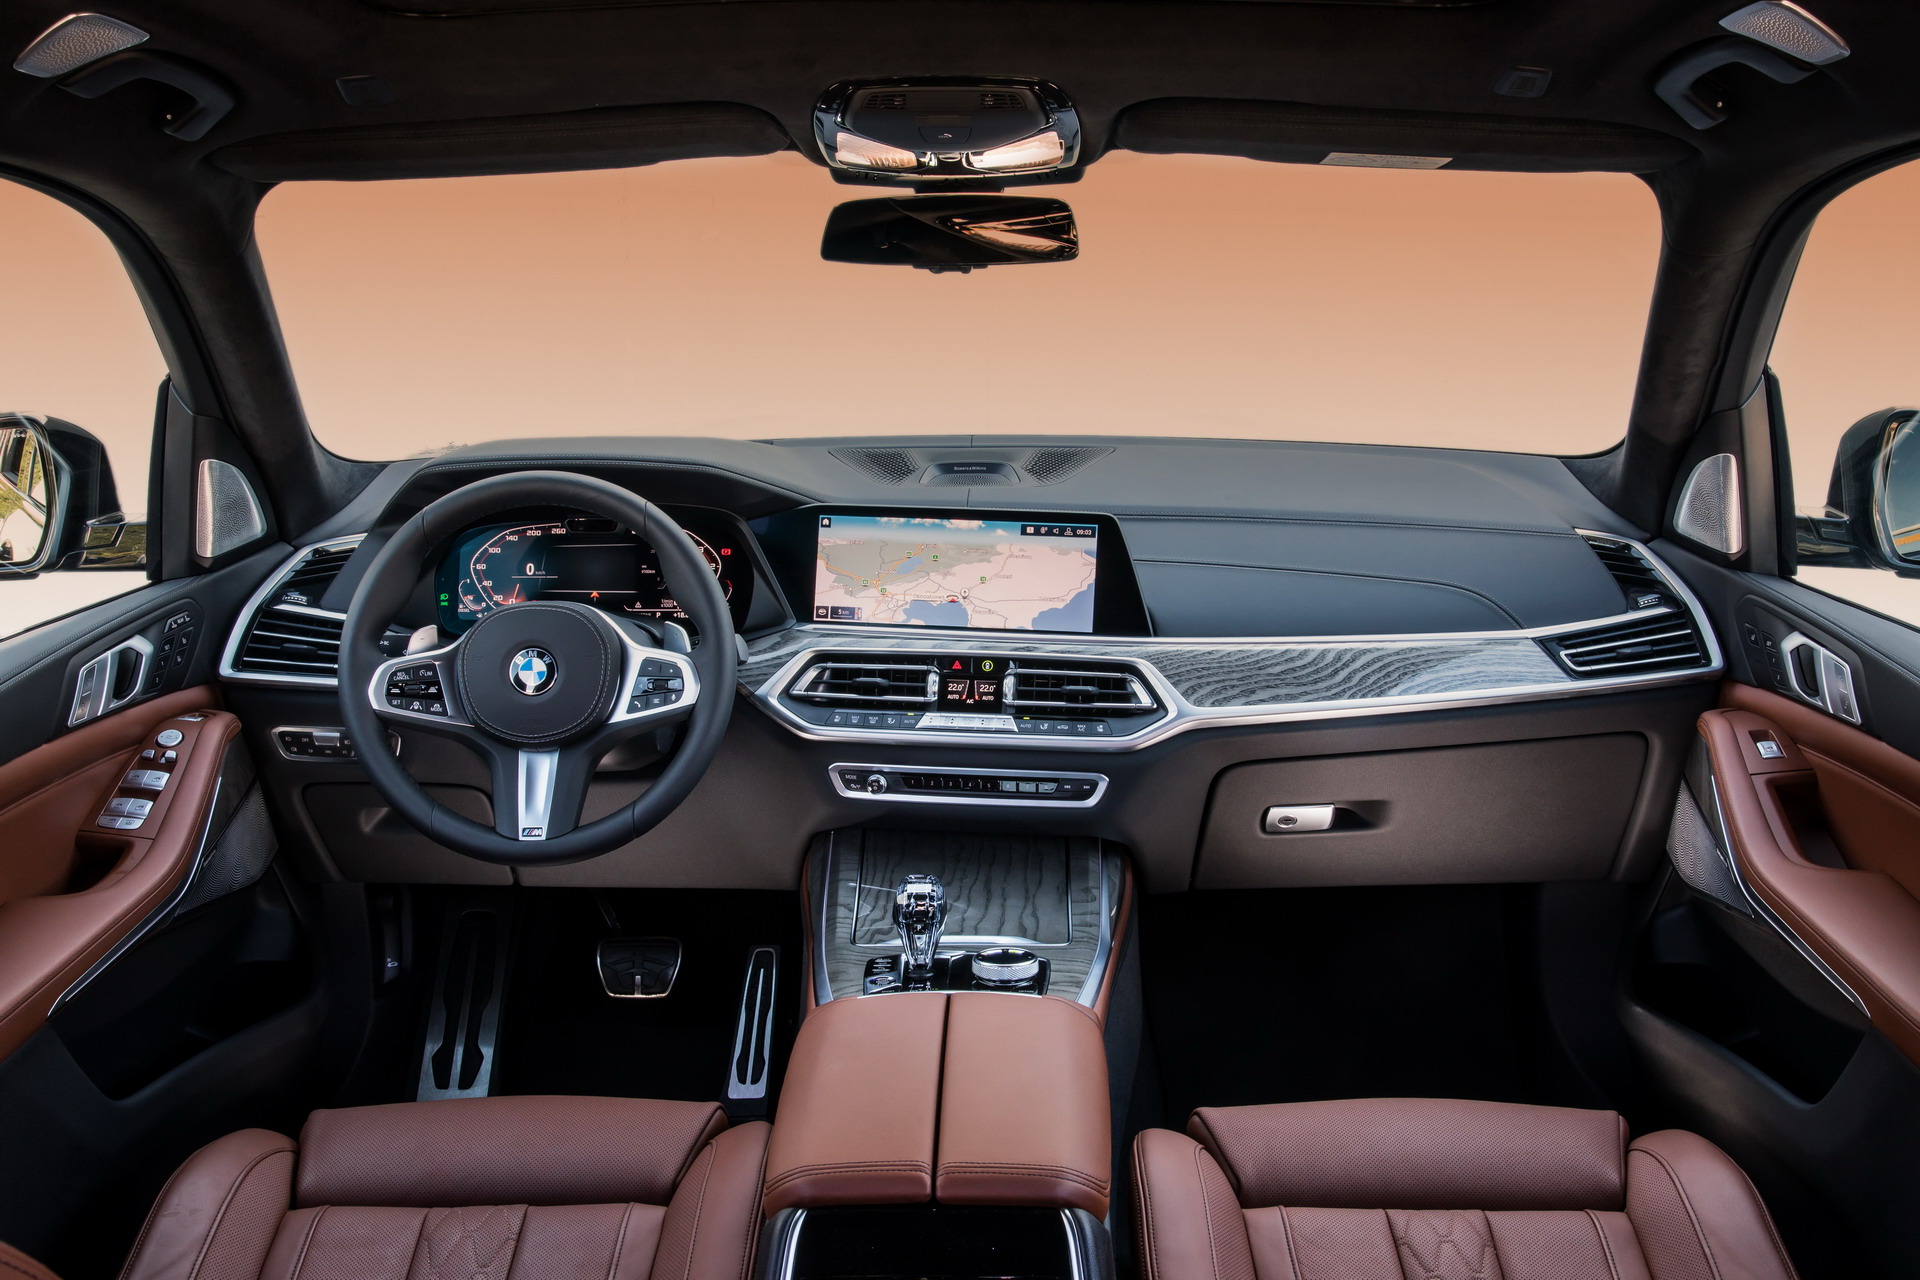 Debating Leather vs. Sensatec Seats for Your BMW iX - Cost, Maintenance & Durability